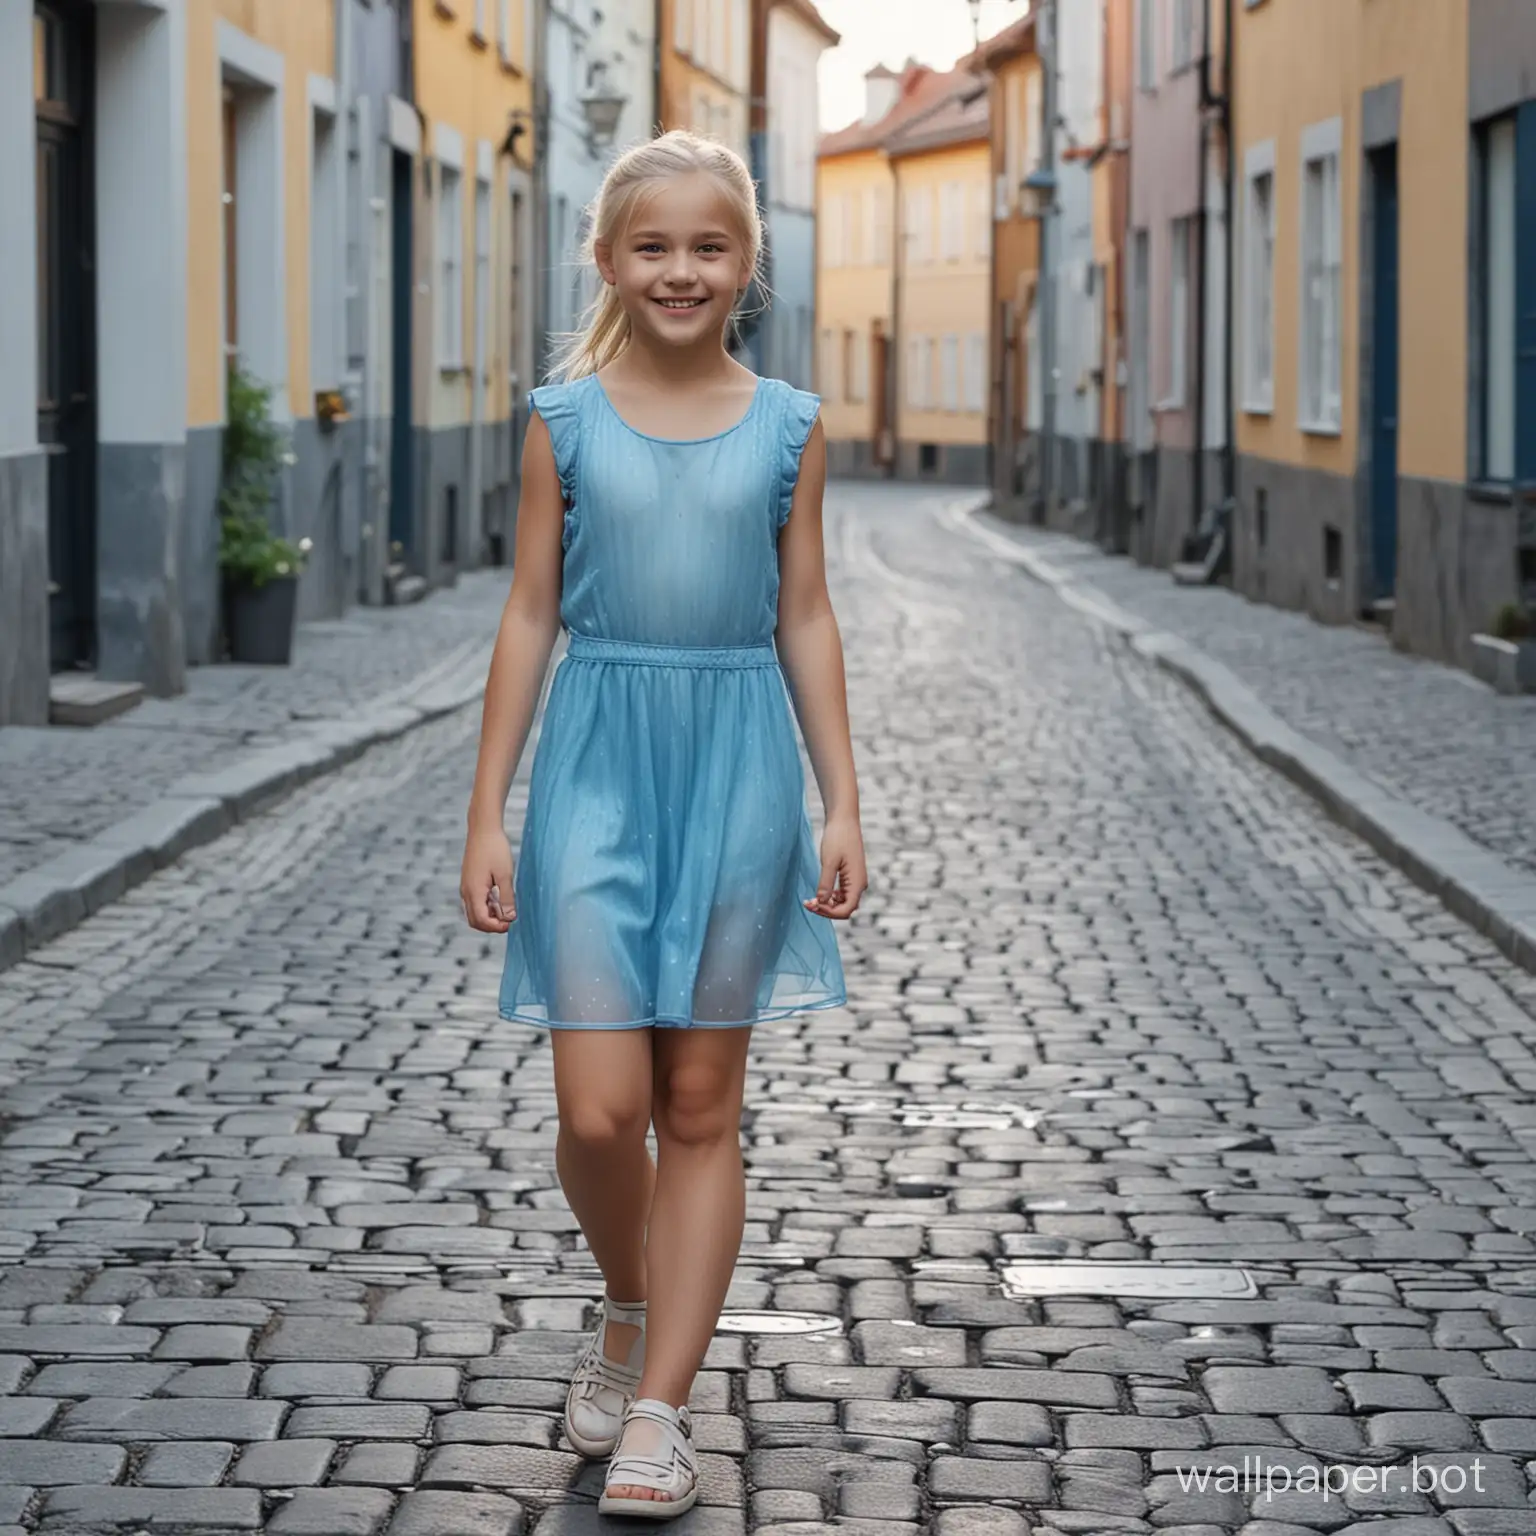 Preteen-Girl-Walking-in-Beautiful-Translucent-Blue-Dress-on-Street